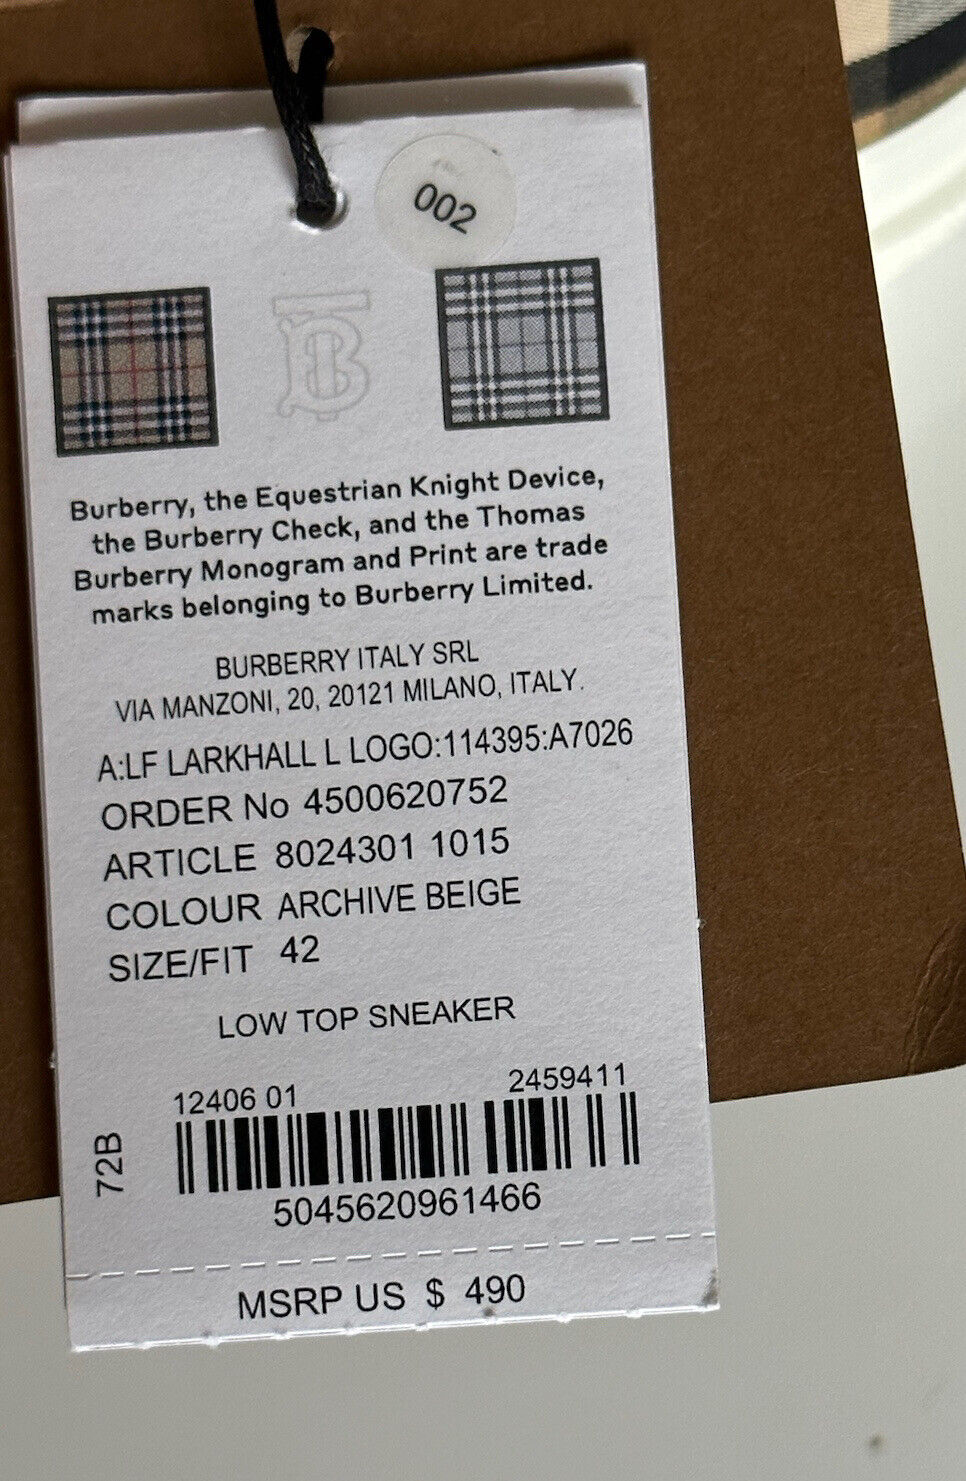 NIB Burberry Larkhall Logo Women's Archive Beige Sneakers 12 US (42 Eu) 8024301